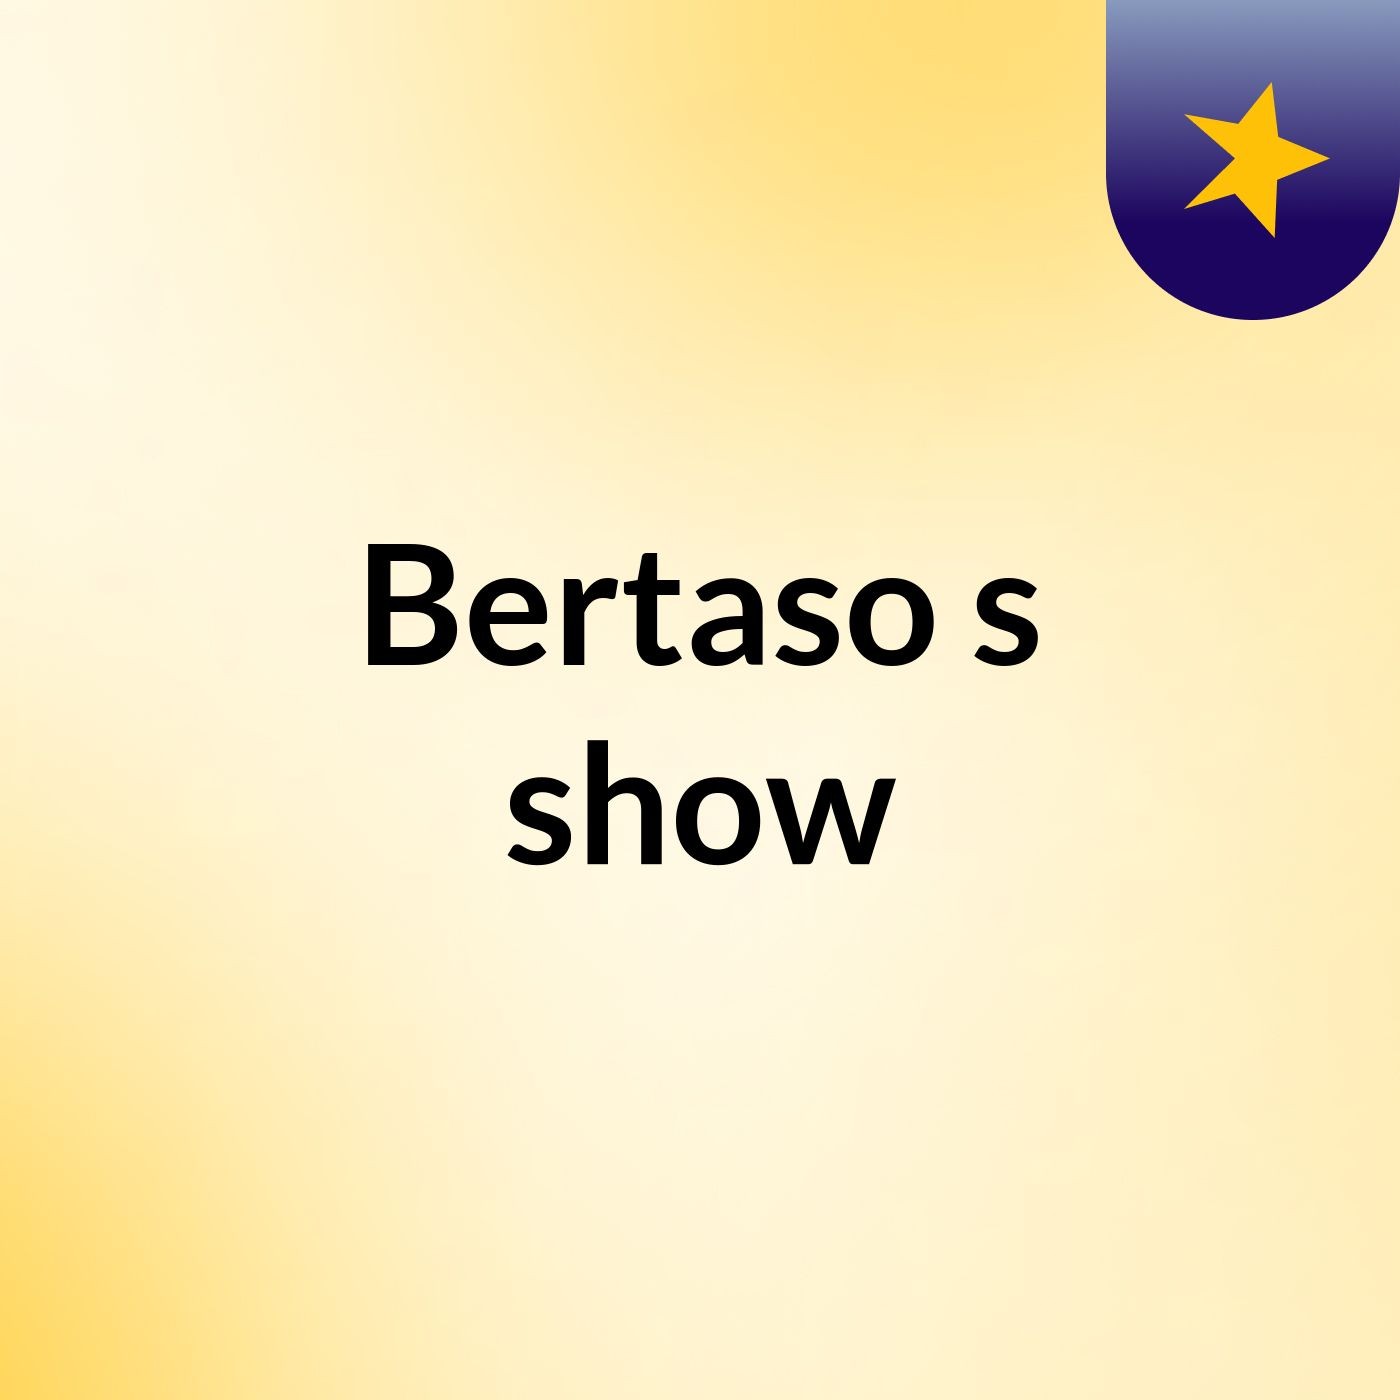 Bertaso's show